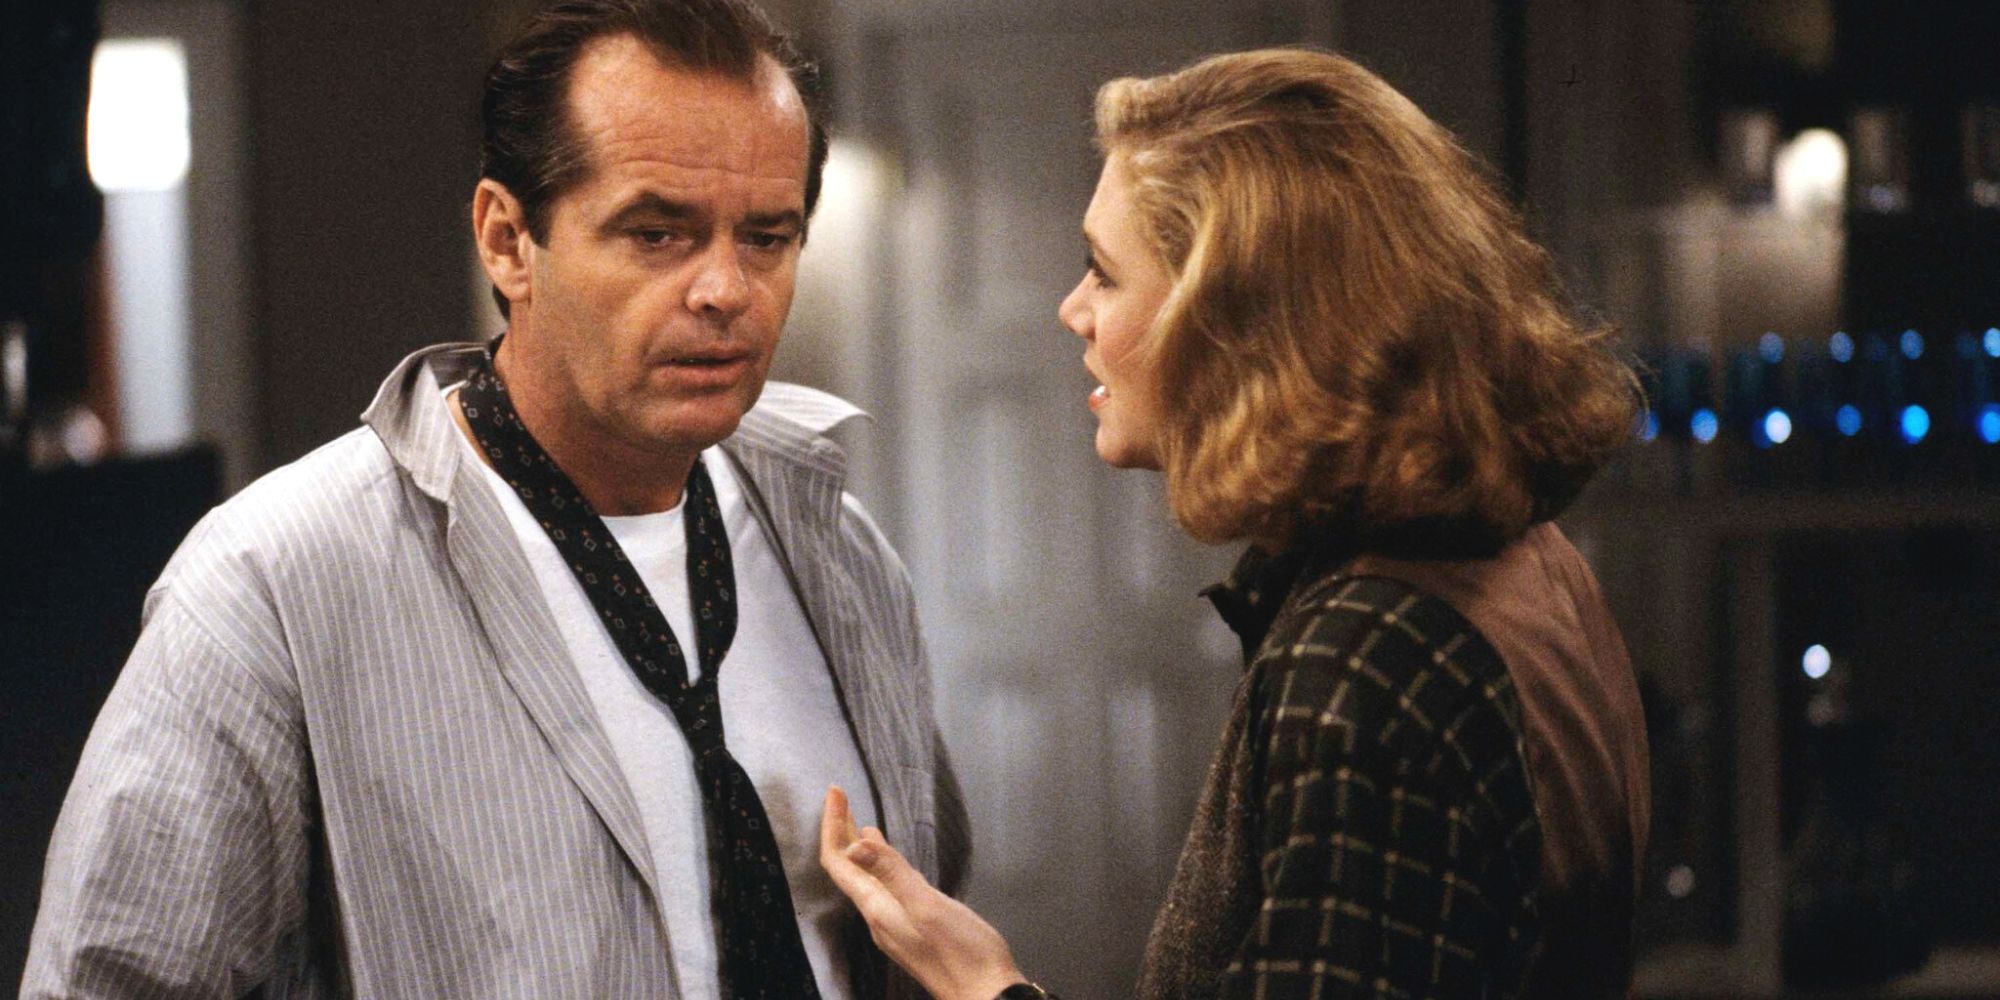 Jack Nicholson speaking to Kathleen Turner in honor of Prizzi